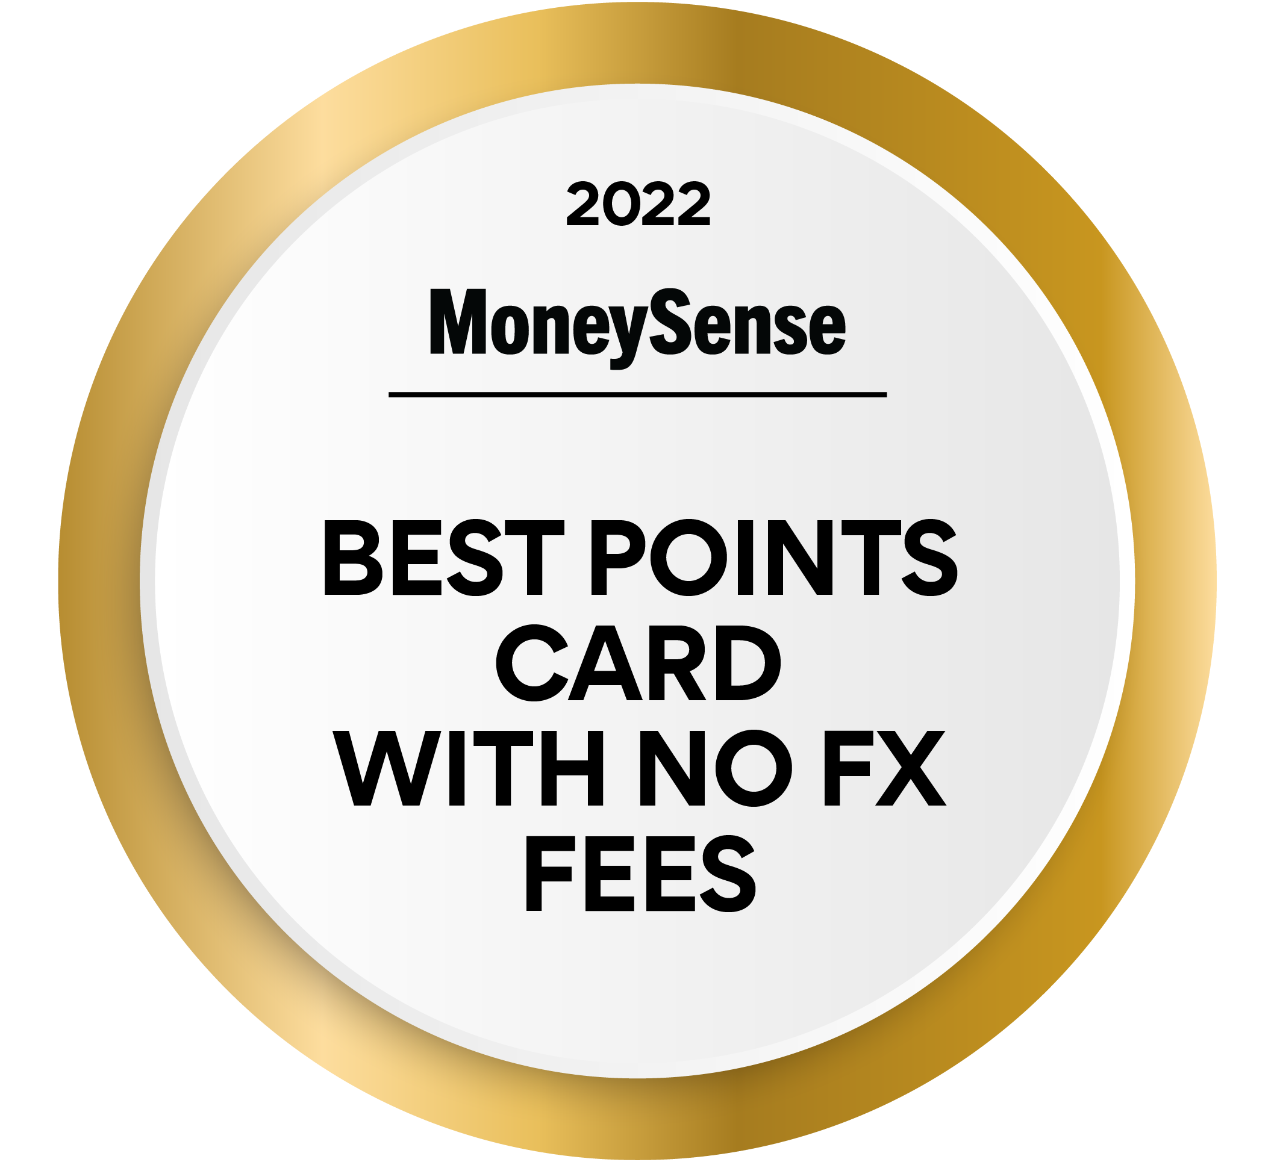 Badge: Winner of the 2021 MoneySense Best Rewards Card (for No FX).